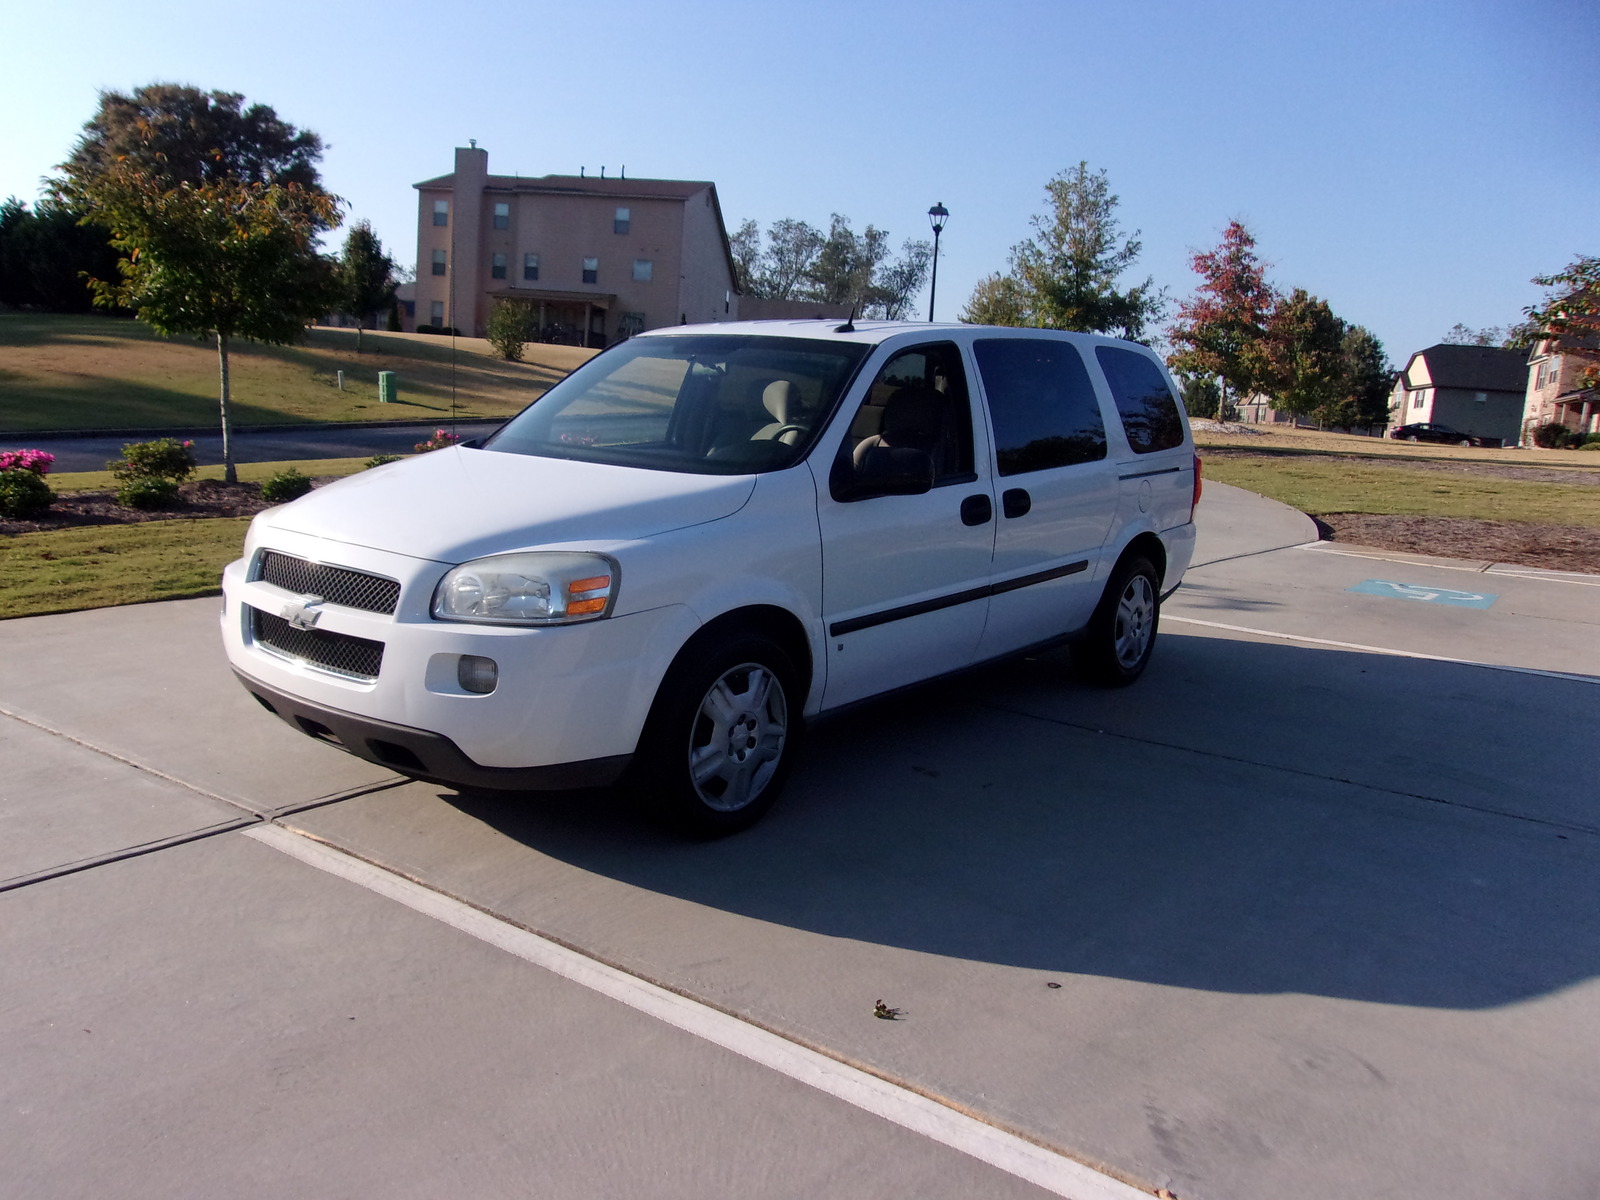 Used 2008 Chevrolet Uplander for Sale in Atlanta, GA (Test Drive at Home) -  Kelley Blue Book